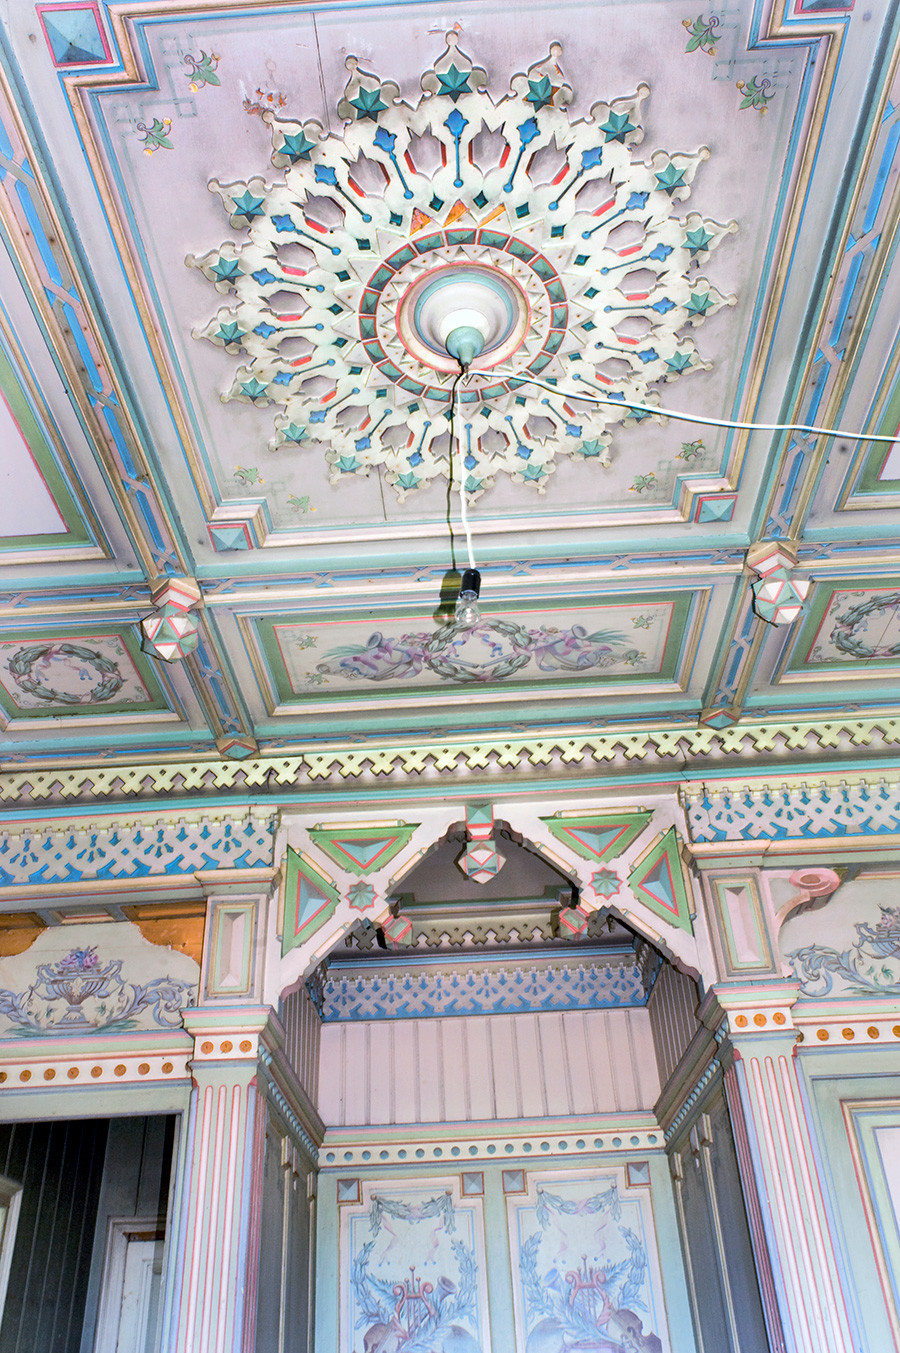 Poliashov house, interior. Upper landing, ceiling ornament. May 29, 2016